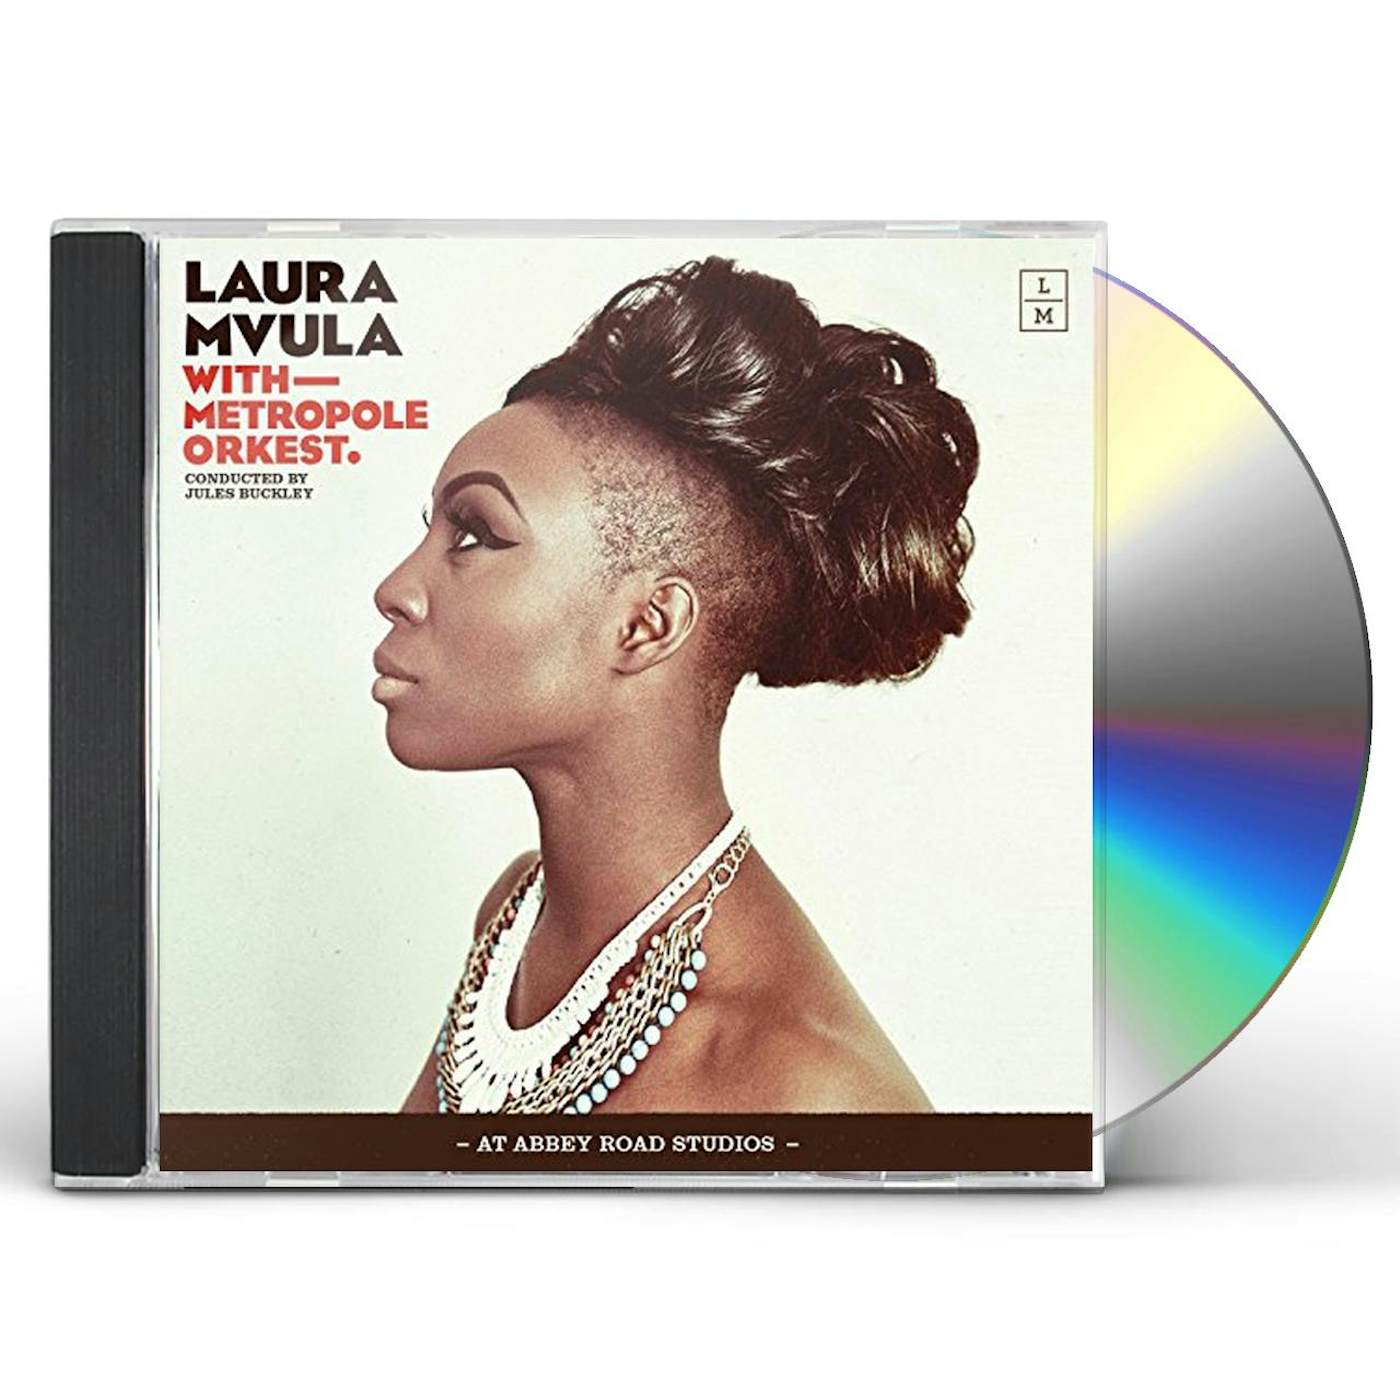 LAURA MVULA WITH METROPOLE ORKEST CD